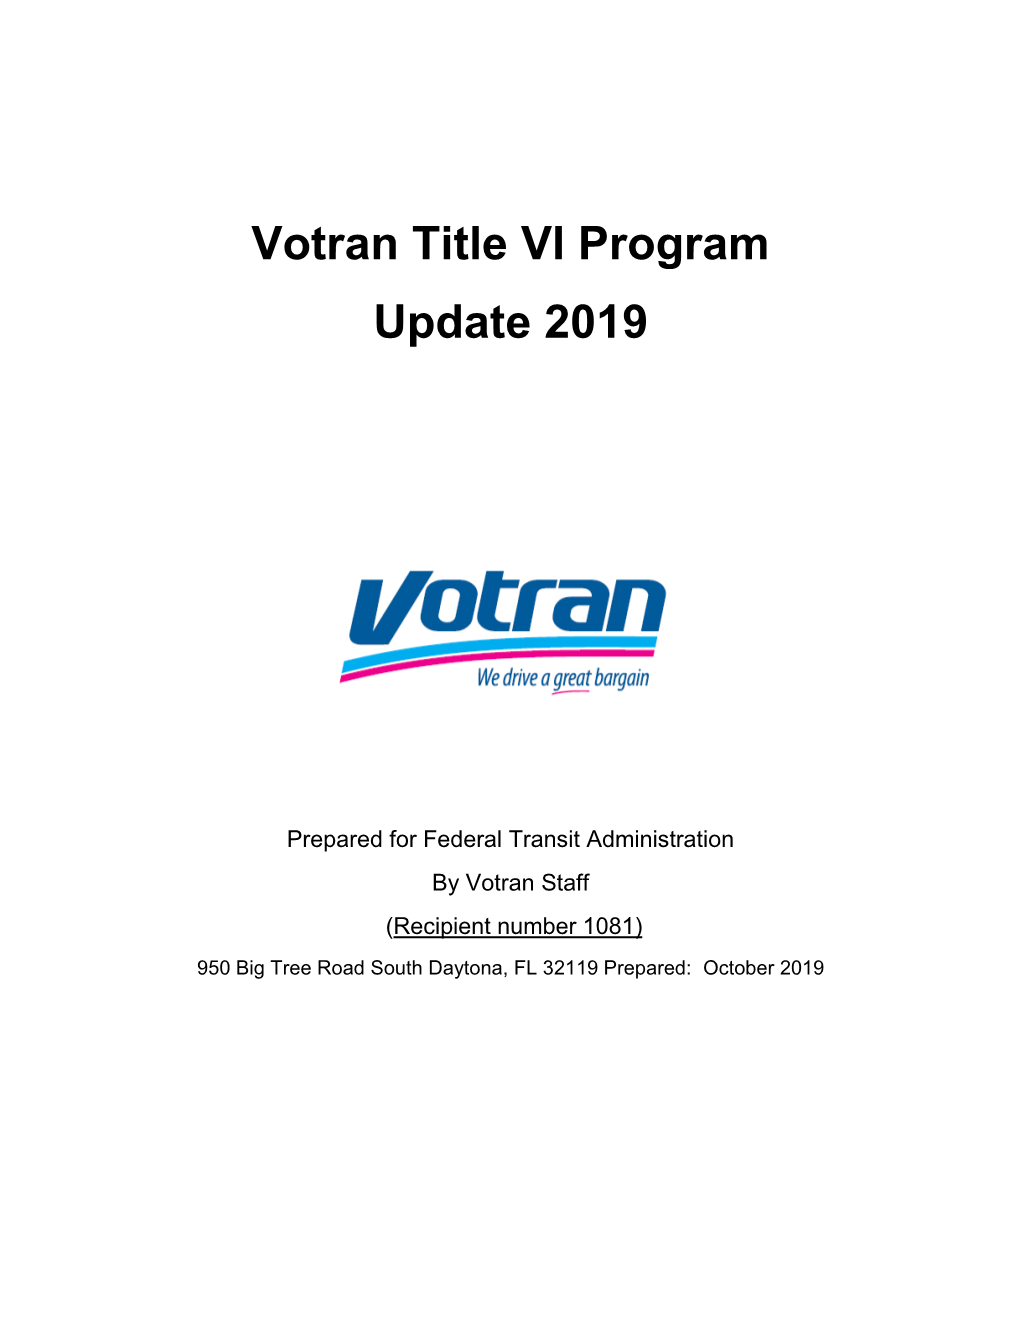 Votran Title VI Program Update 2019